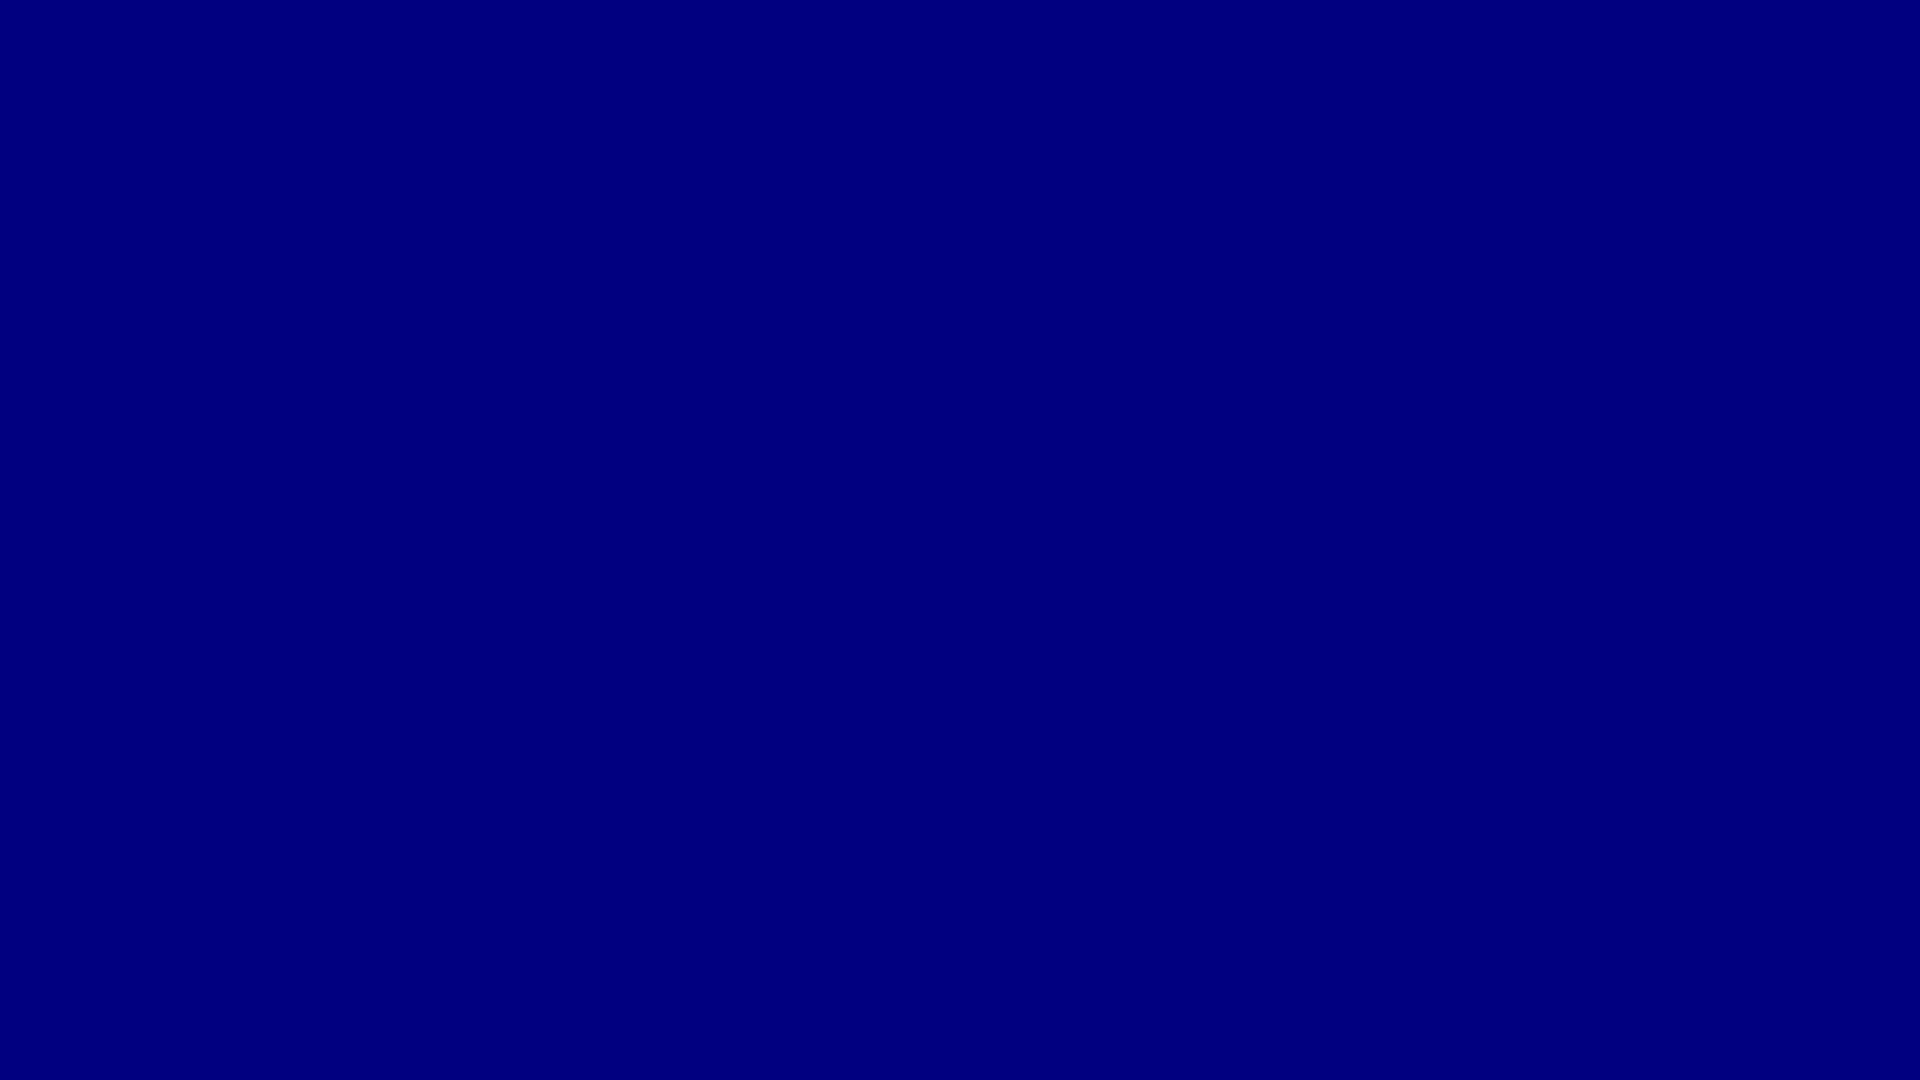 Dark Blue Plain Wallpapers - Top Free Dark Blue Plain Backgrounds